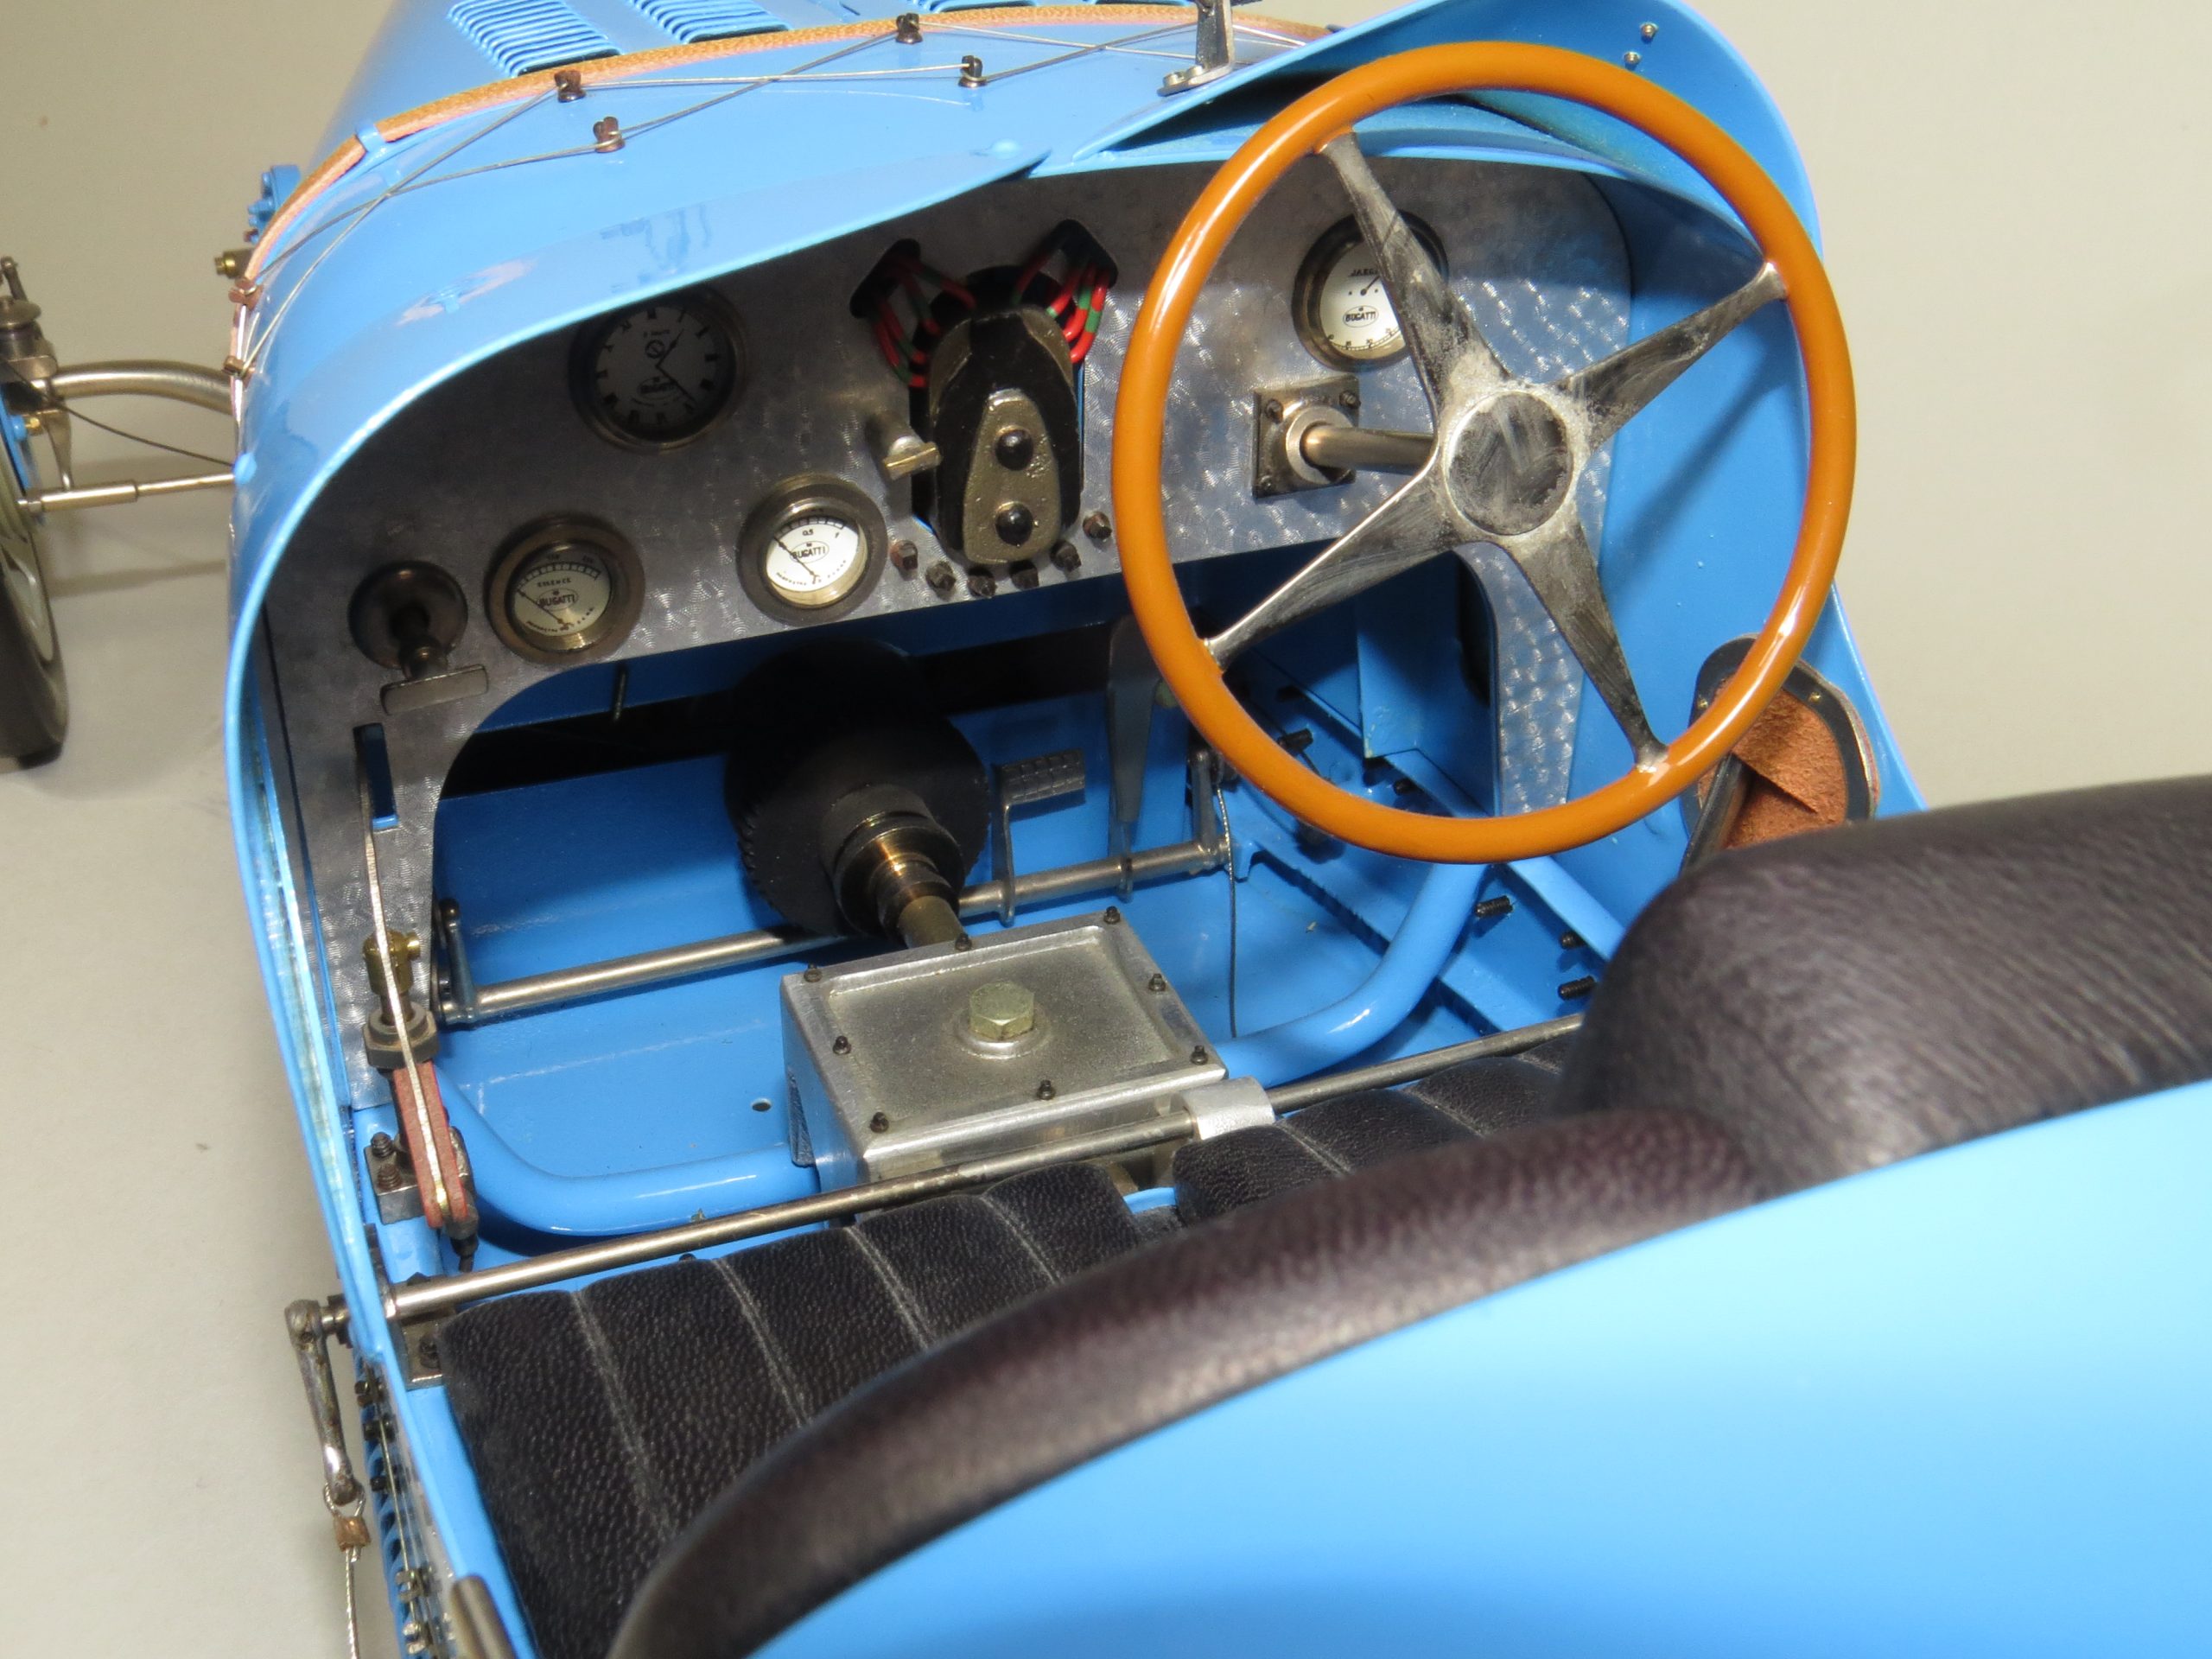 1/8 Bugatti Type 35